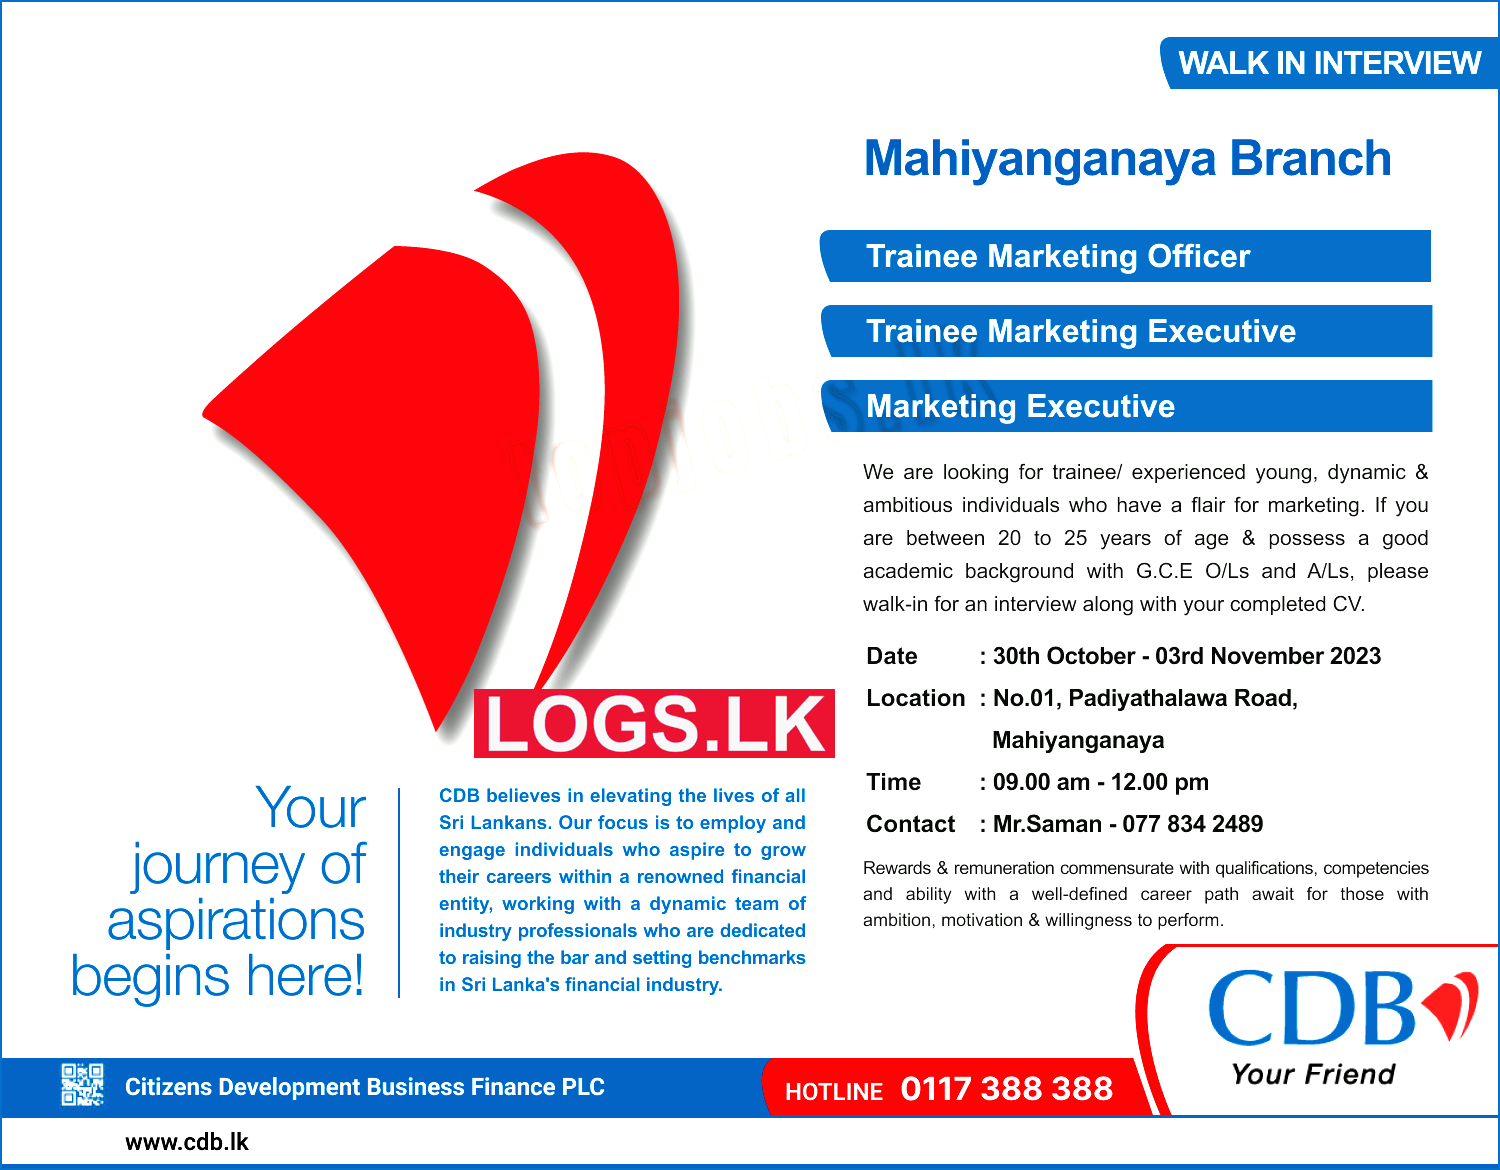 Walk In Interview - Trainee Marketing Officer / Trainee Marketing Executive / Marketing Executive - Mahiyanganaya Job Vacancies